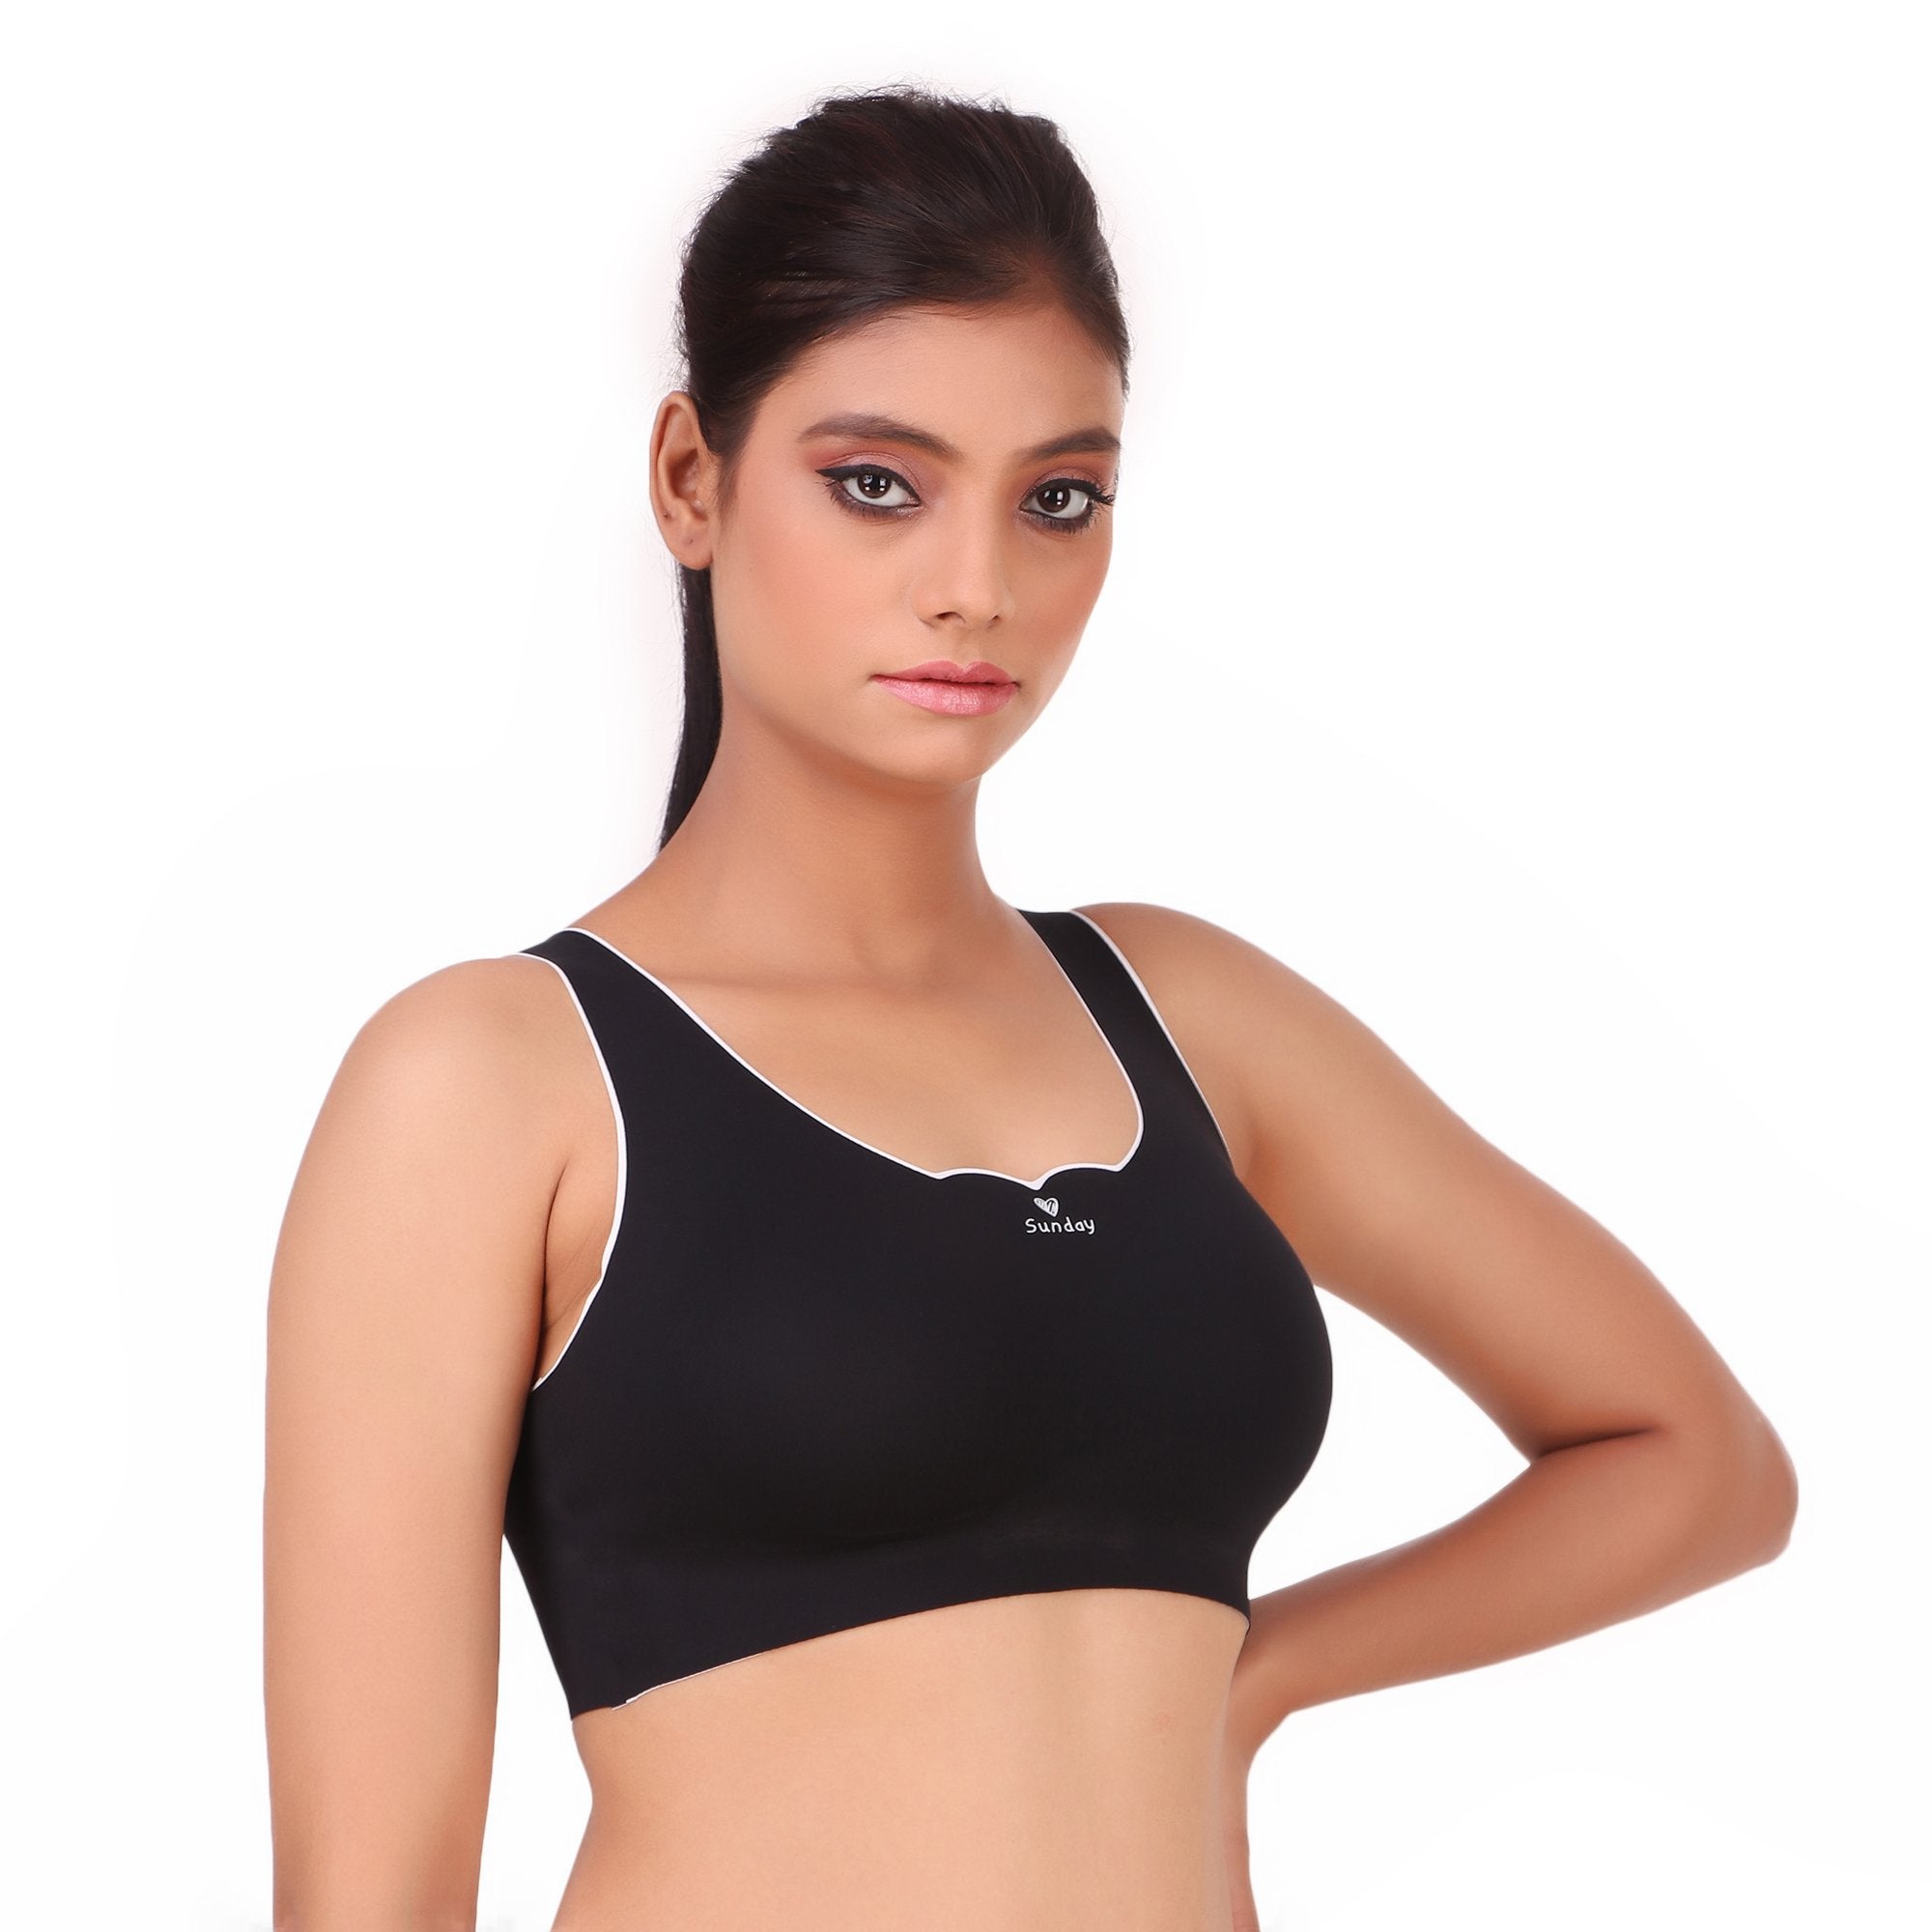 QIDAI Underwear for Women Push Up Adjustable Bra Tube Top India